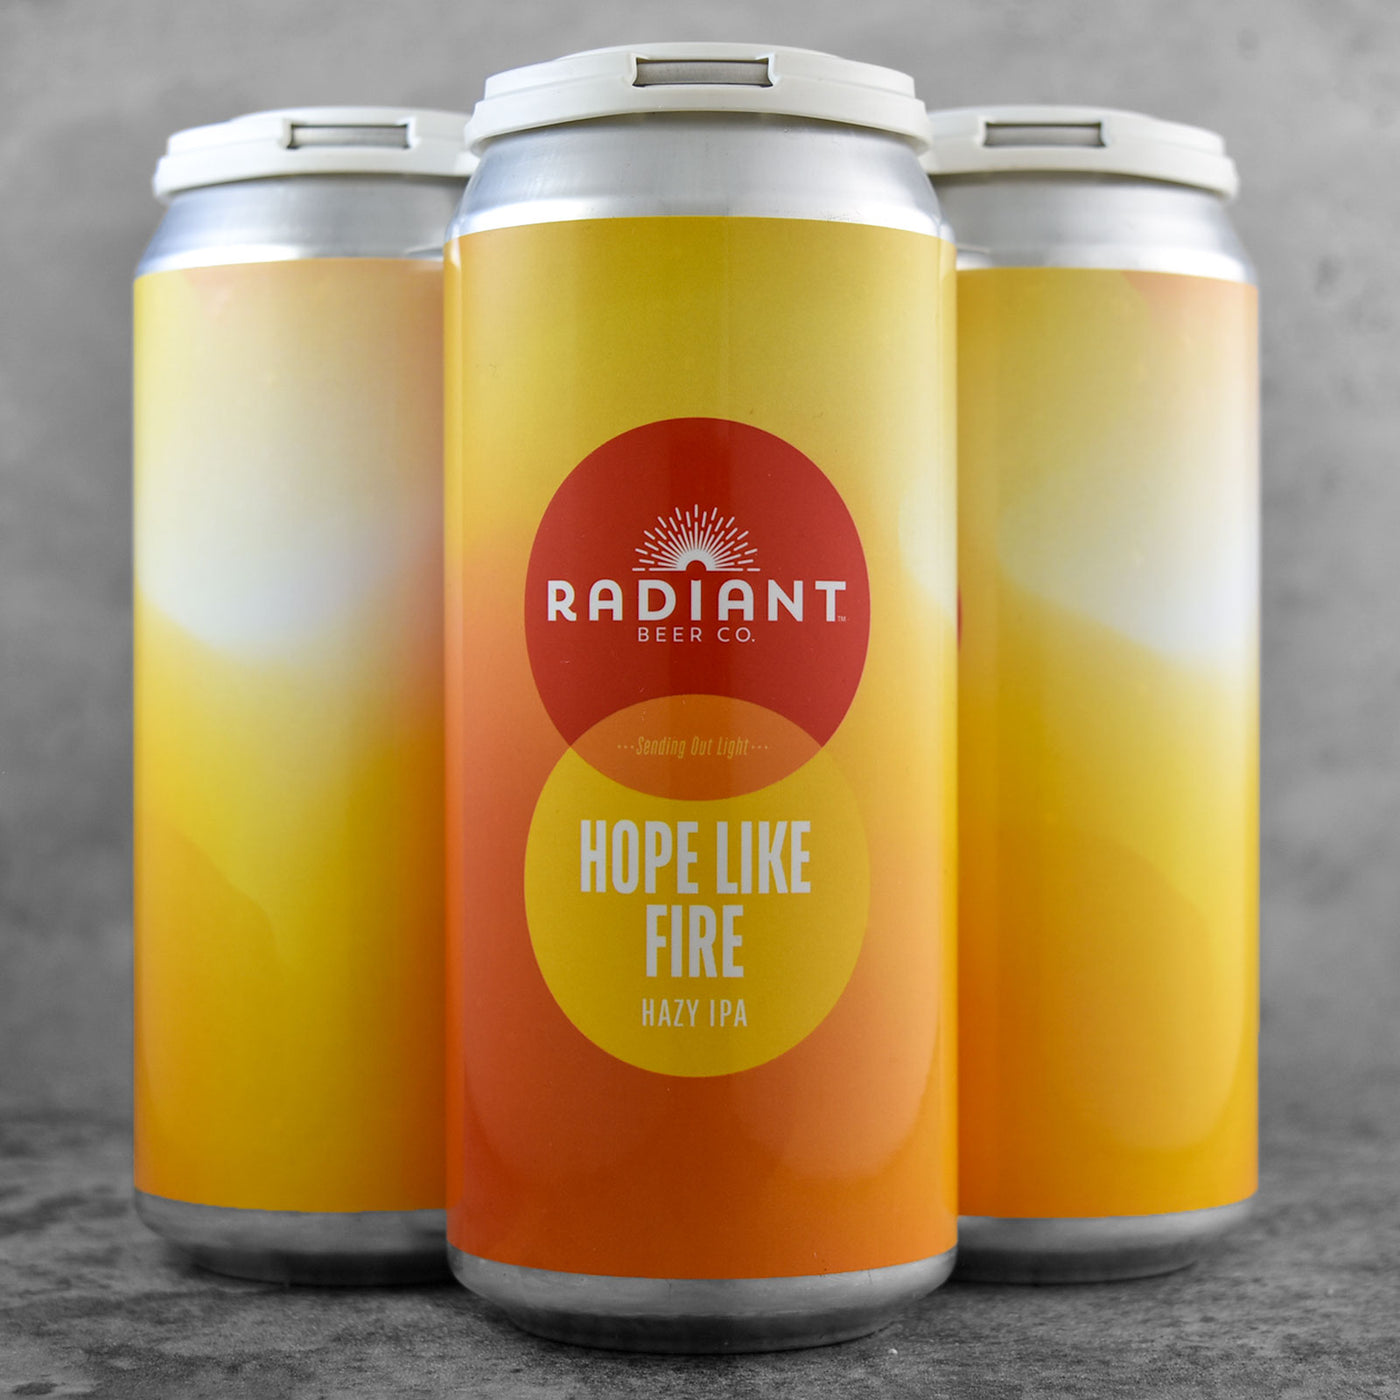 Radiant Beer Co. Hope Like Fire